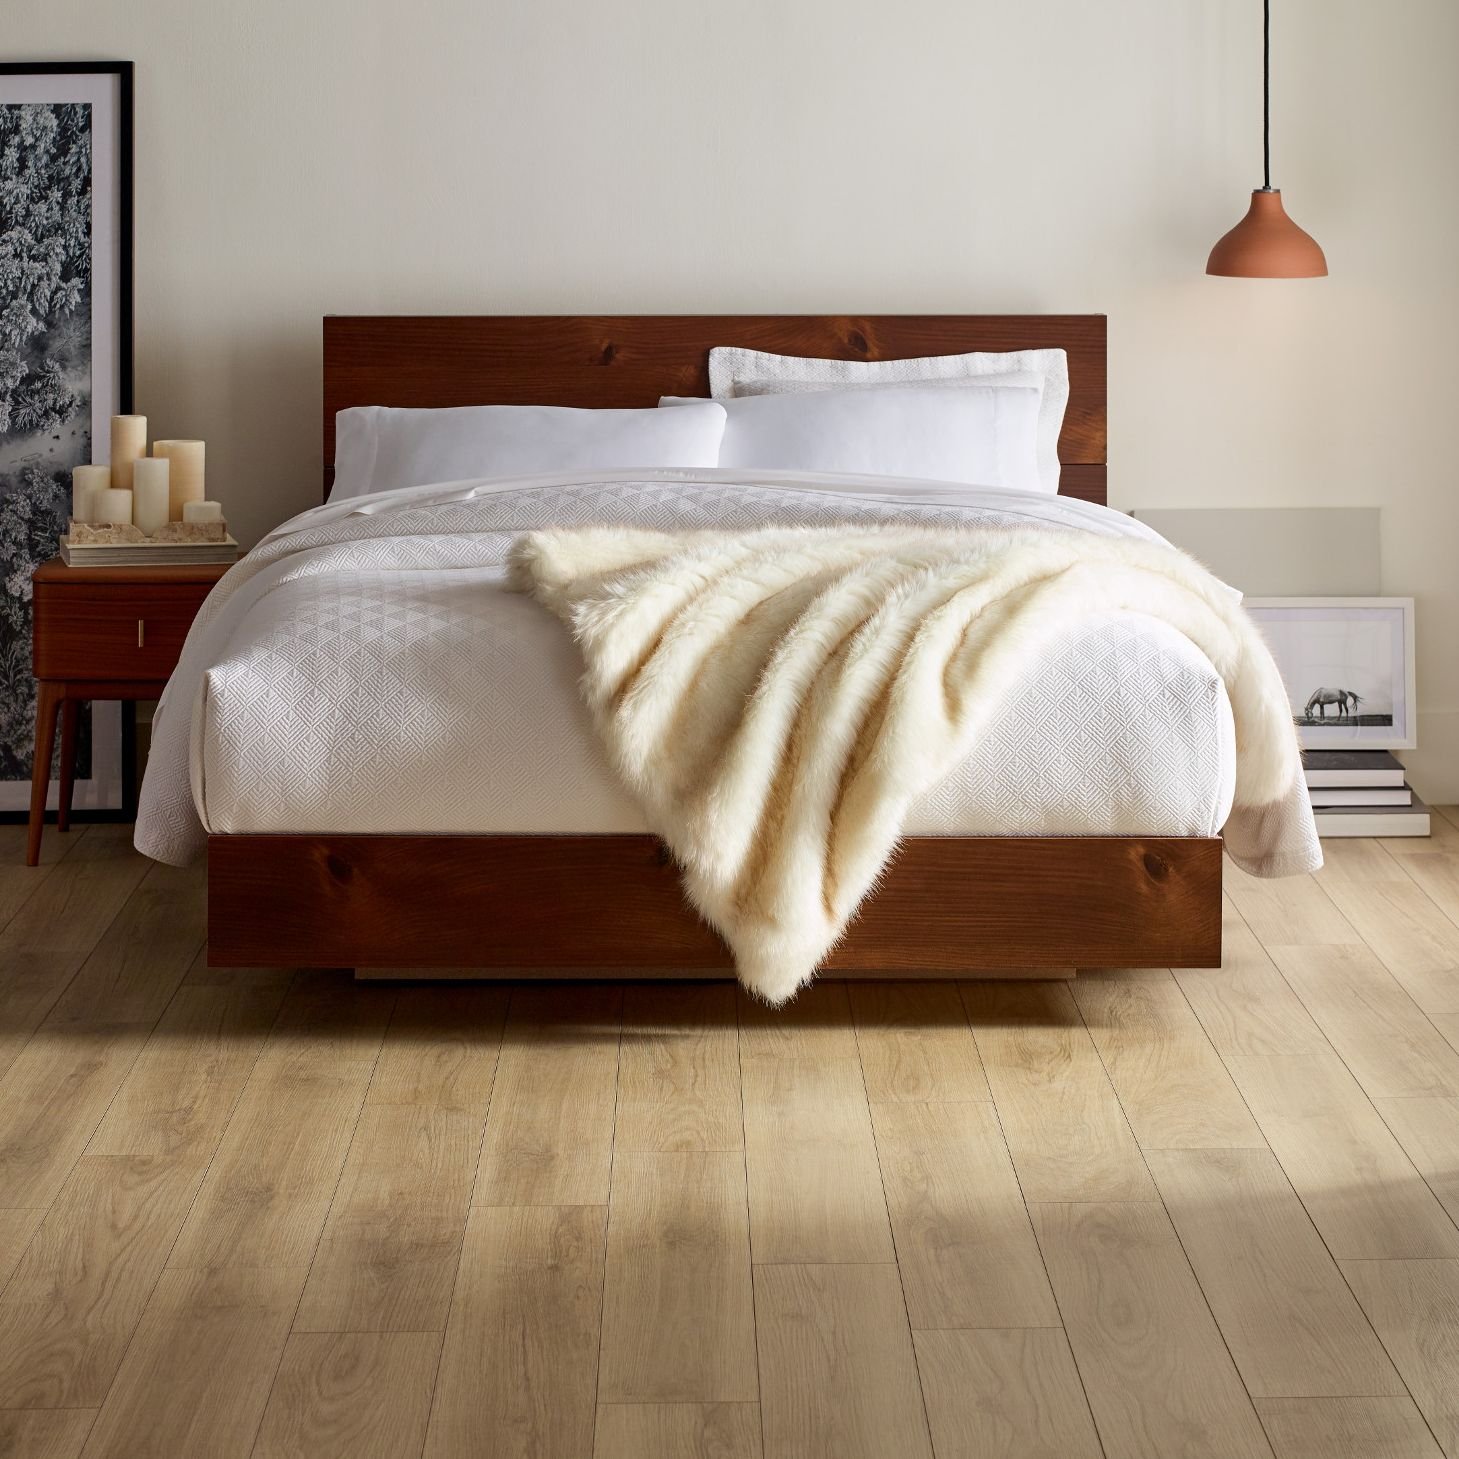 vinyl floor bedroom - House of Carpets Inc. in North Chesterfield